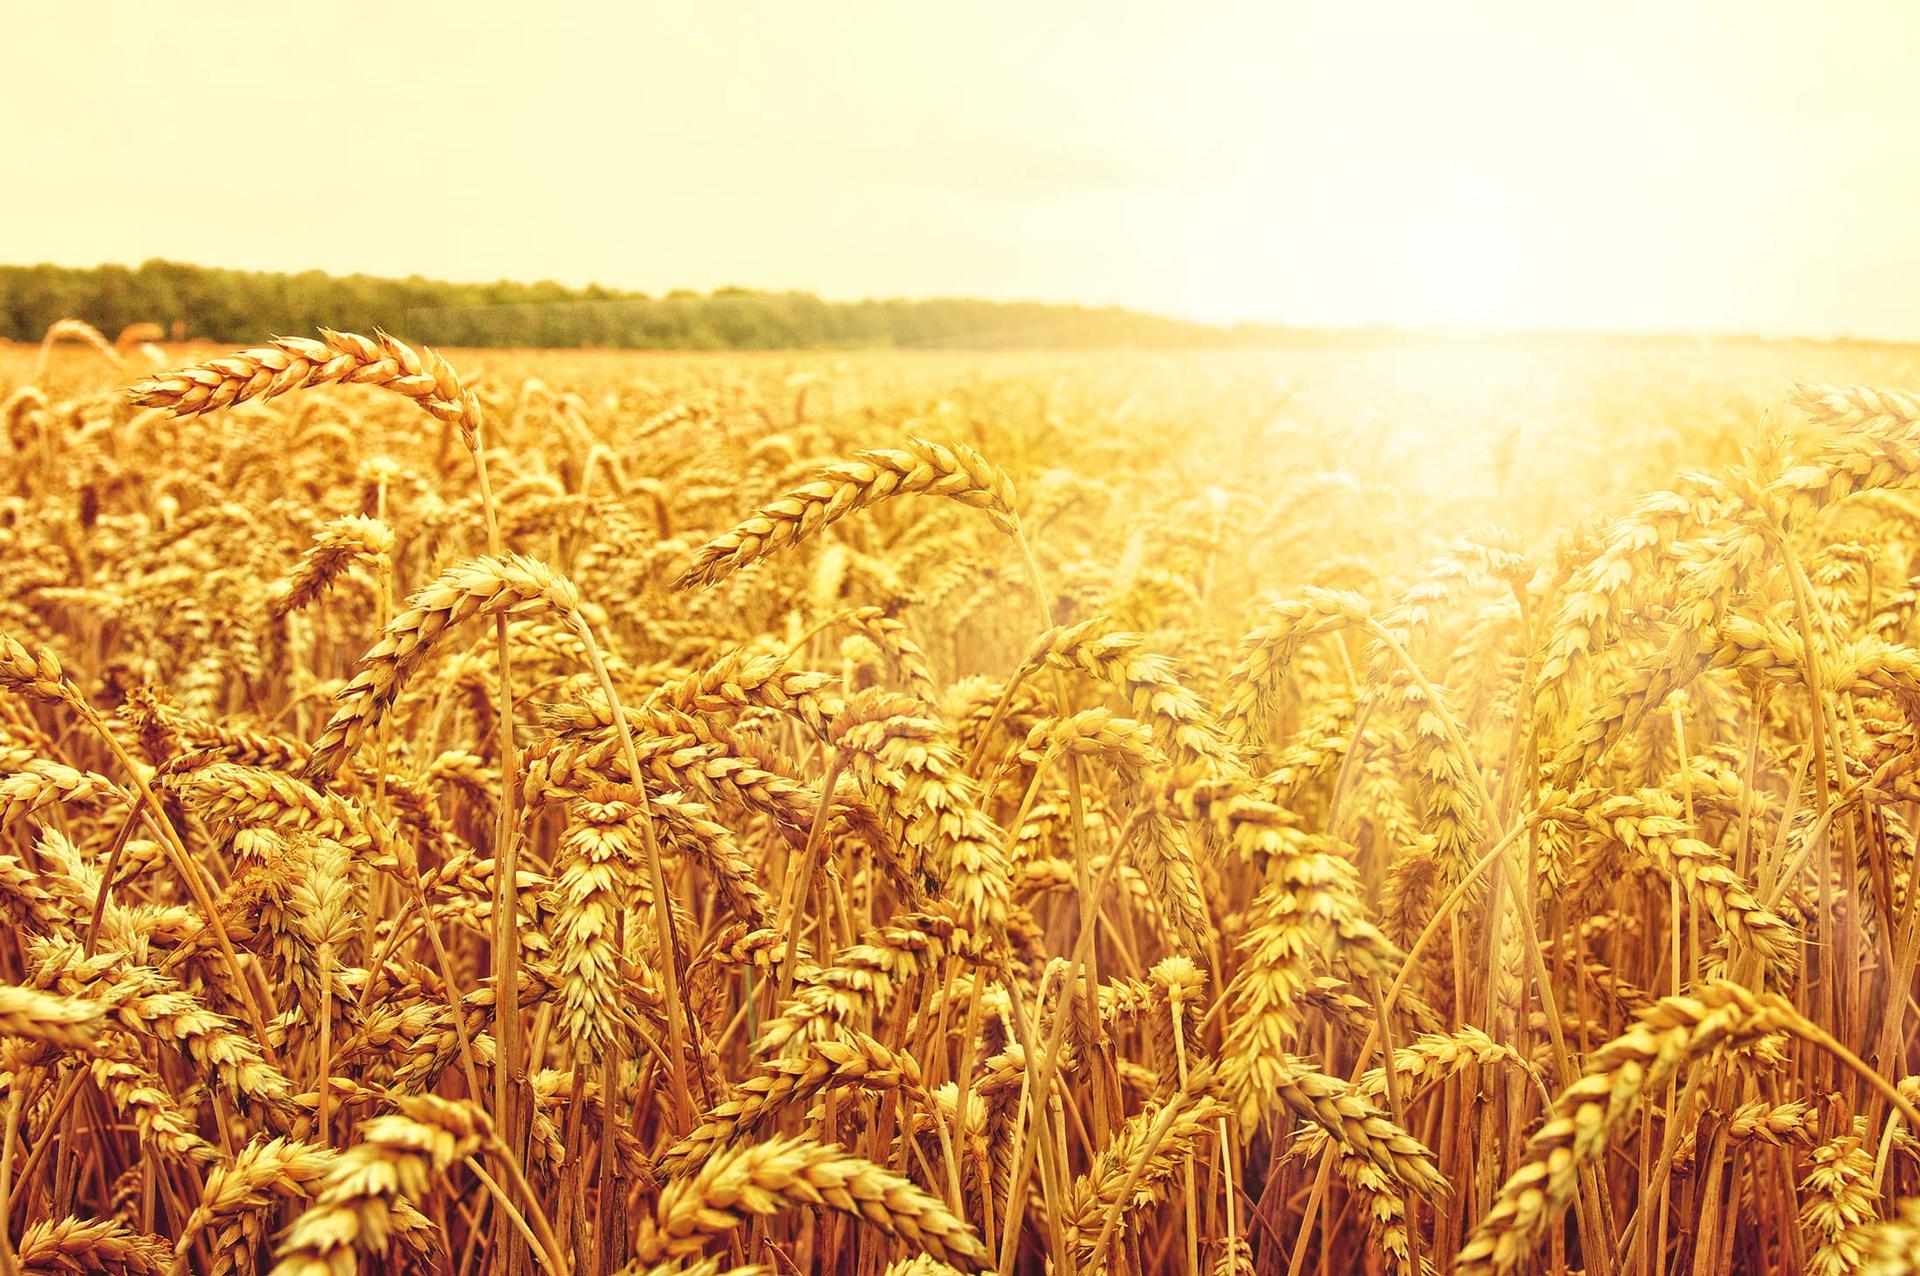 Golden cornfields